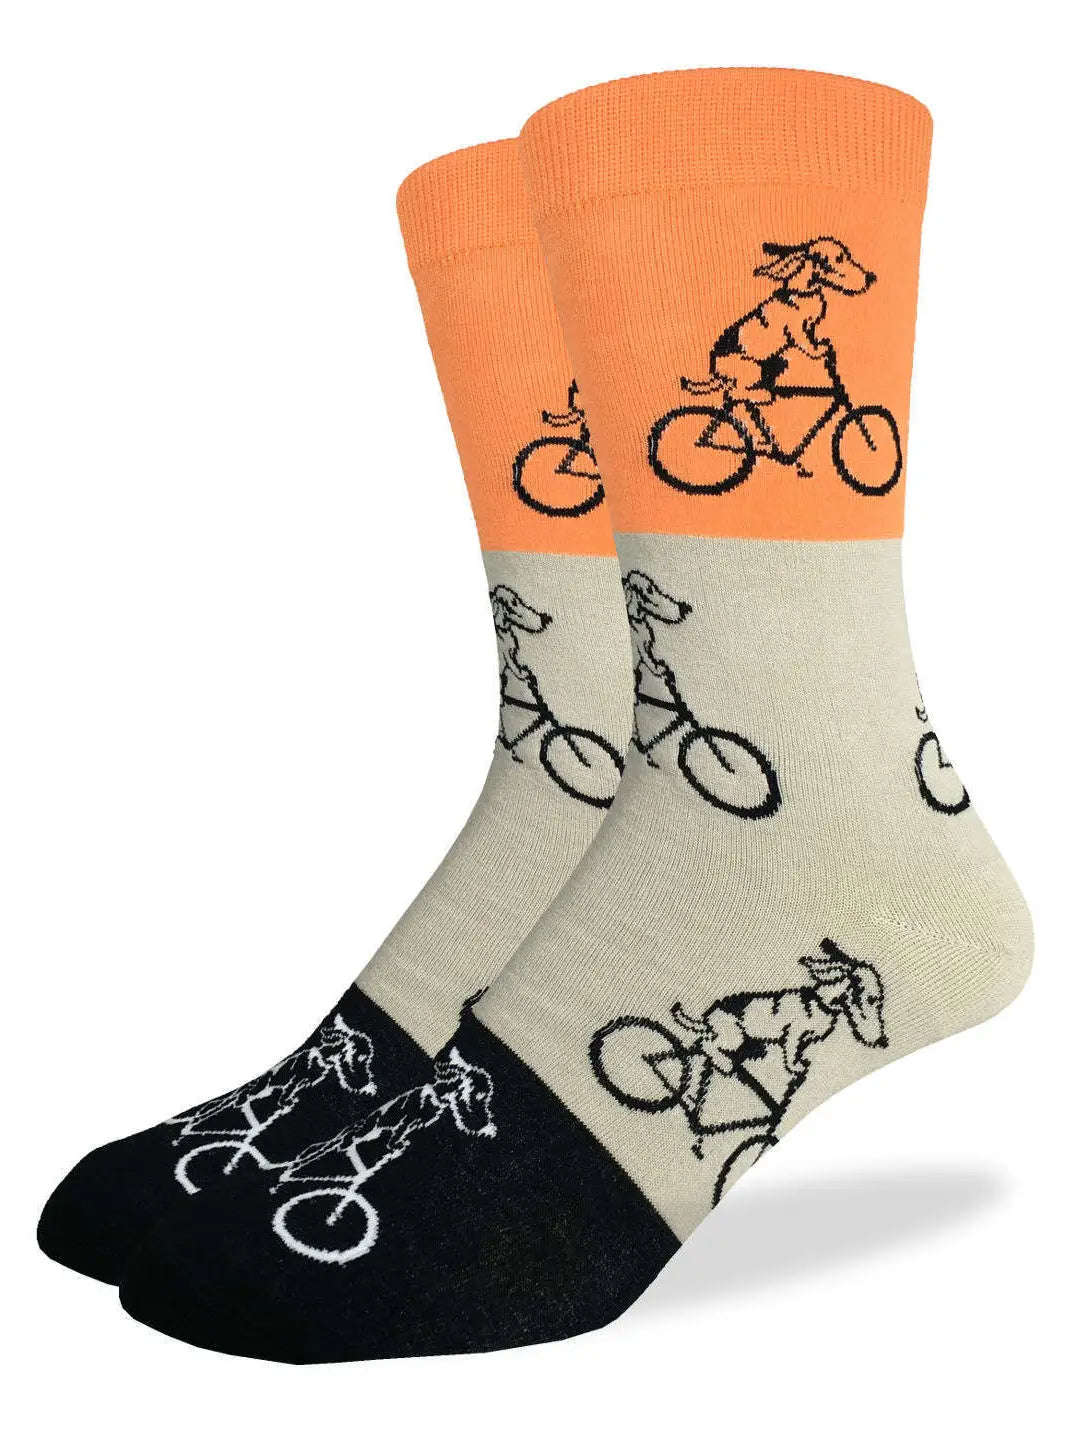 Dog-themed Socks - Orange Dog Riding Bike